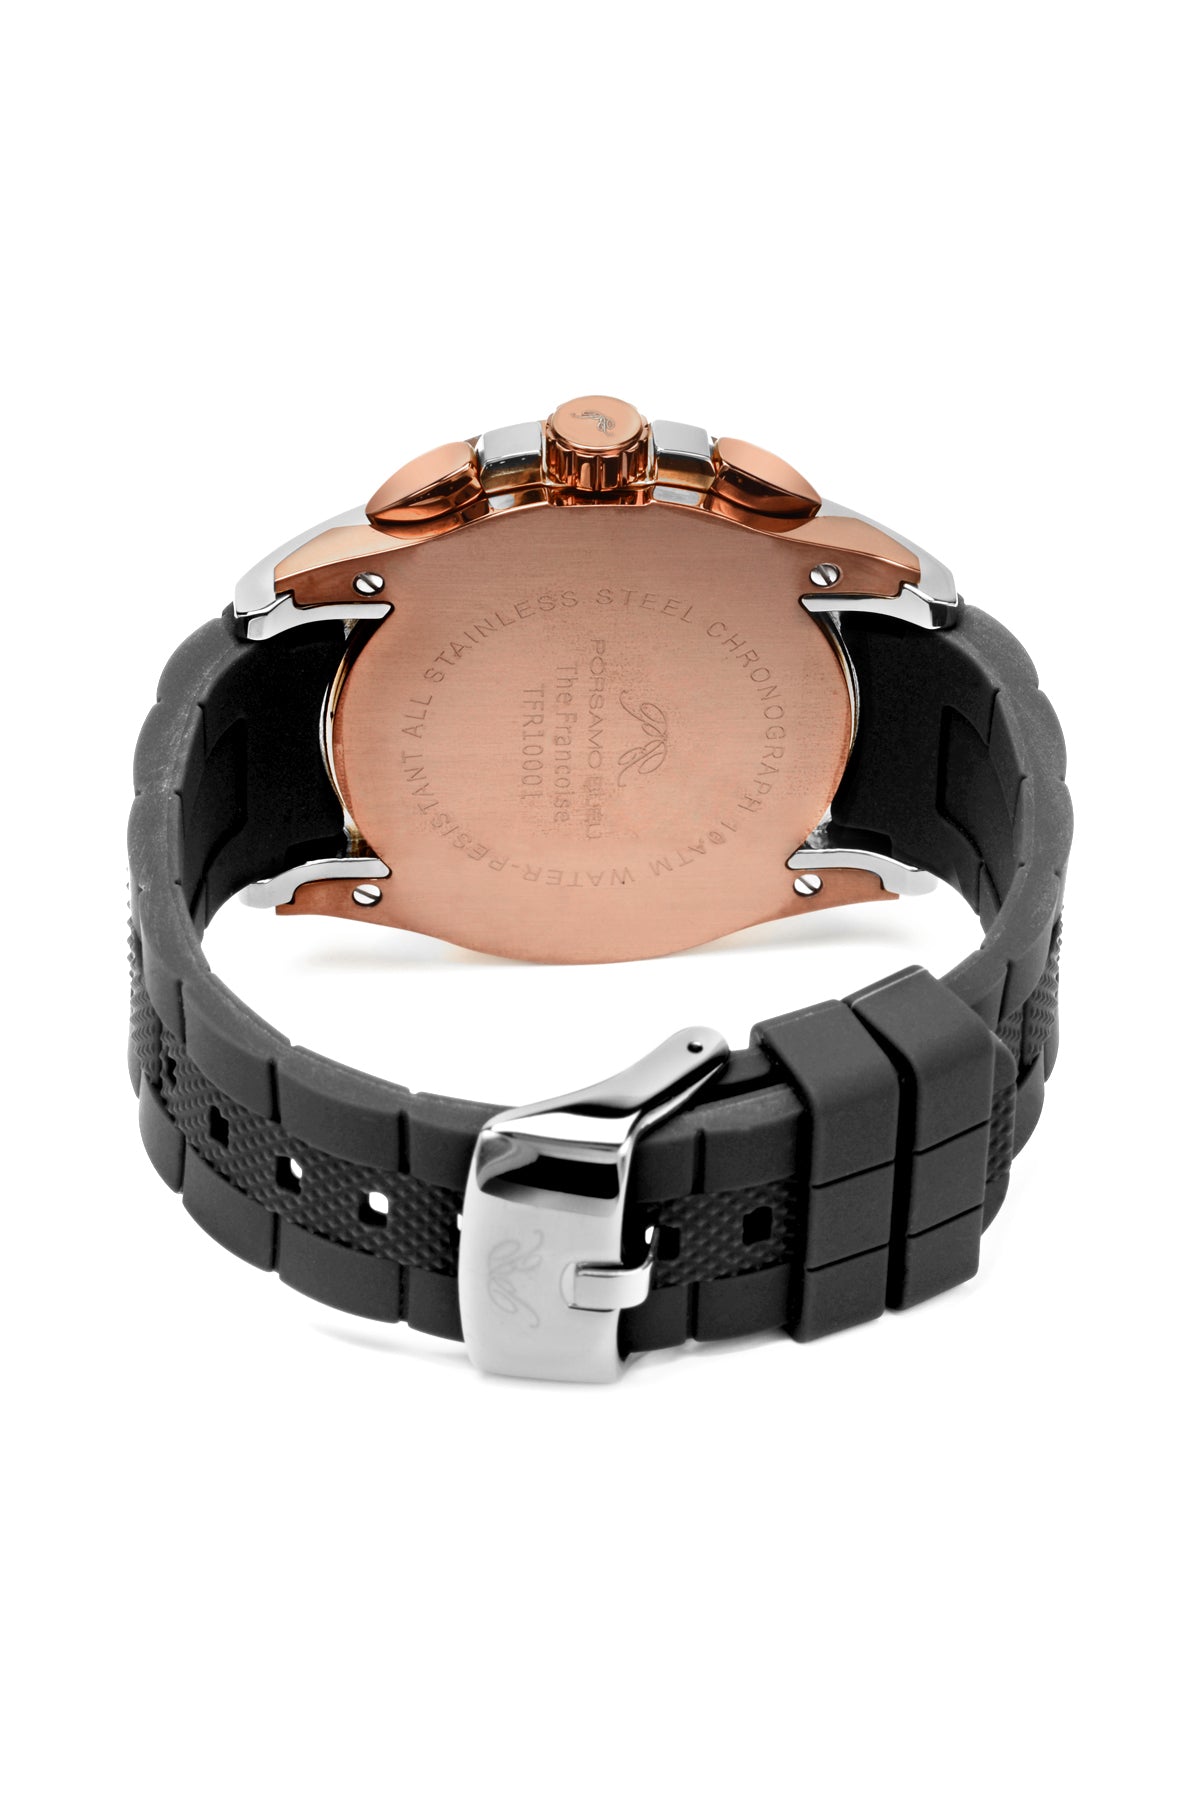 Porsamo Bleu Francoise Luxury Chronograph Men's Watch, Silicone Strap, Silver, Black 244AFRR